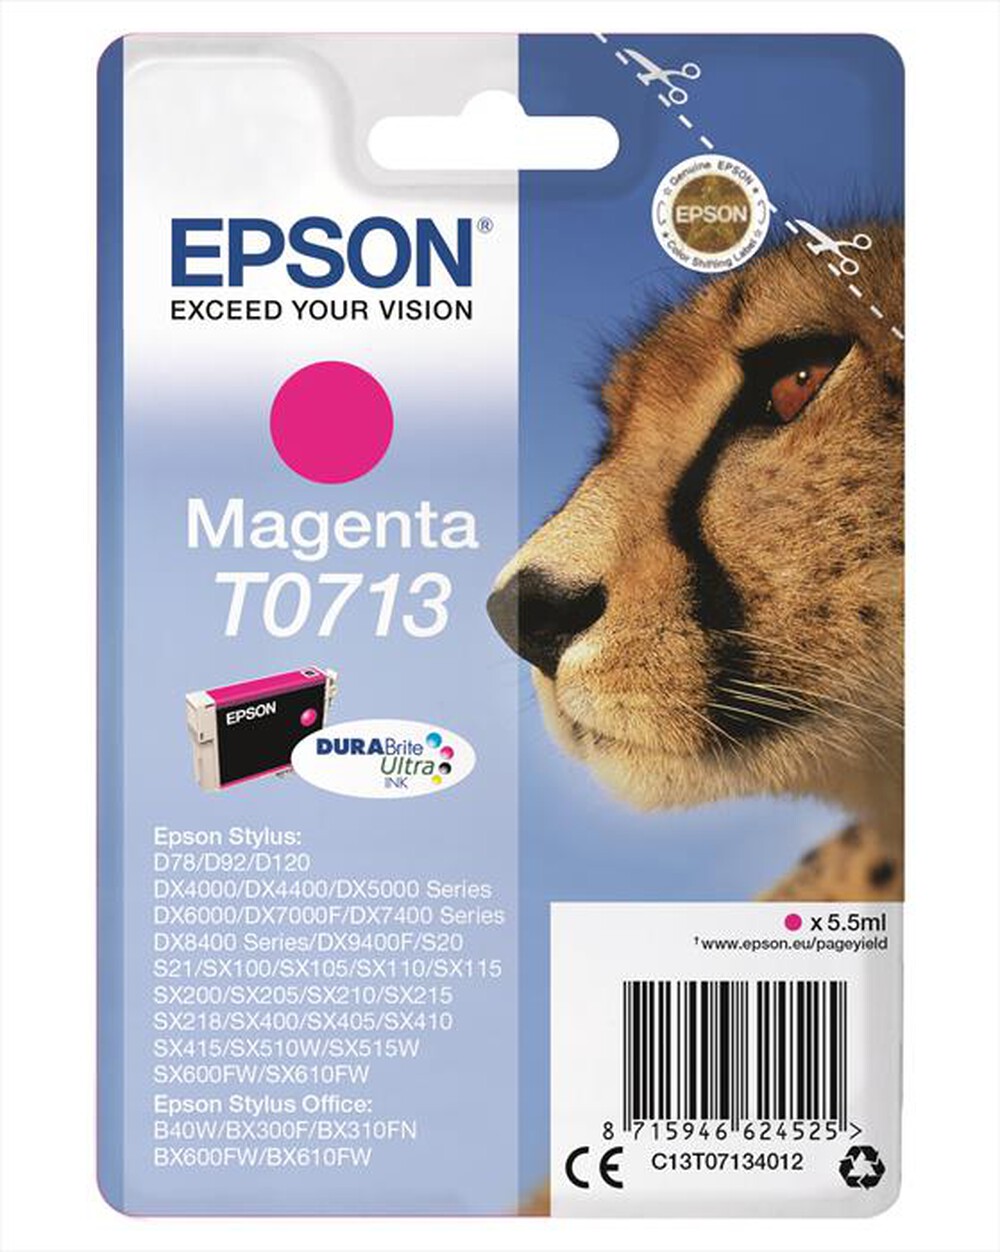 "EPSON - Cartuccia inchiostro magenta C13T07134021-Magenta"